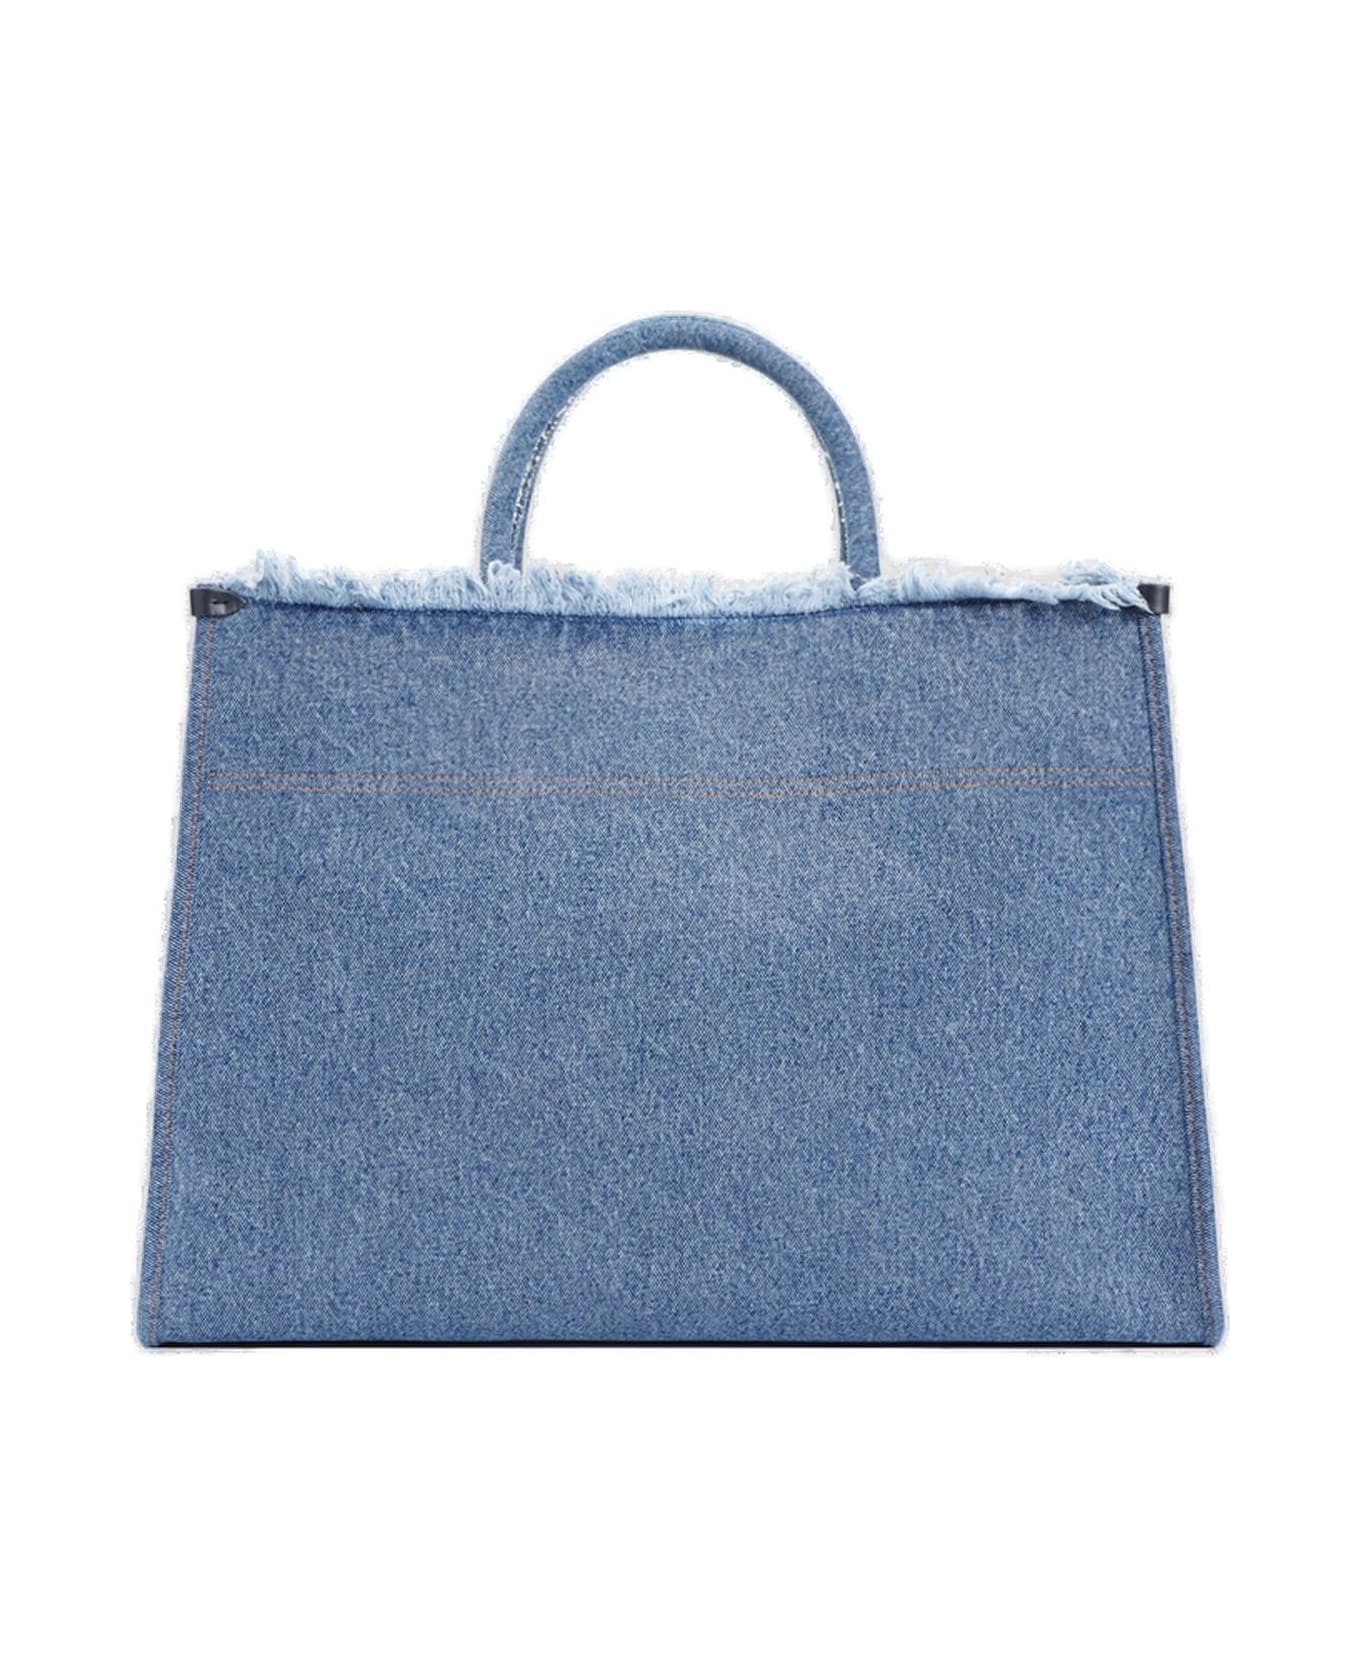 Lanvin Frayed Edge Denim Tote Bag - Blu denim